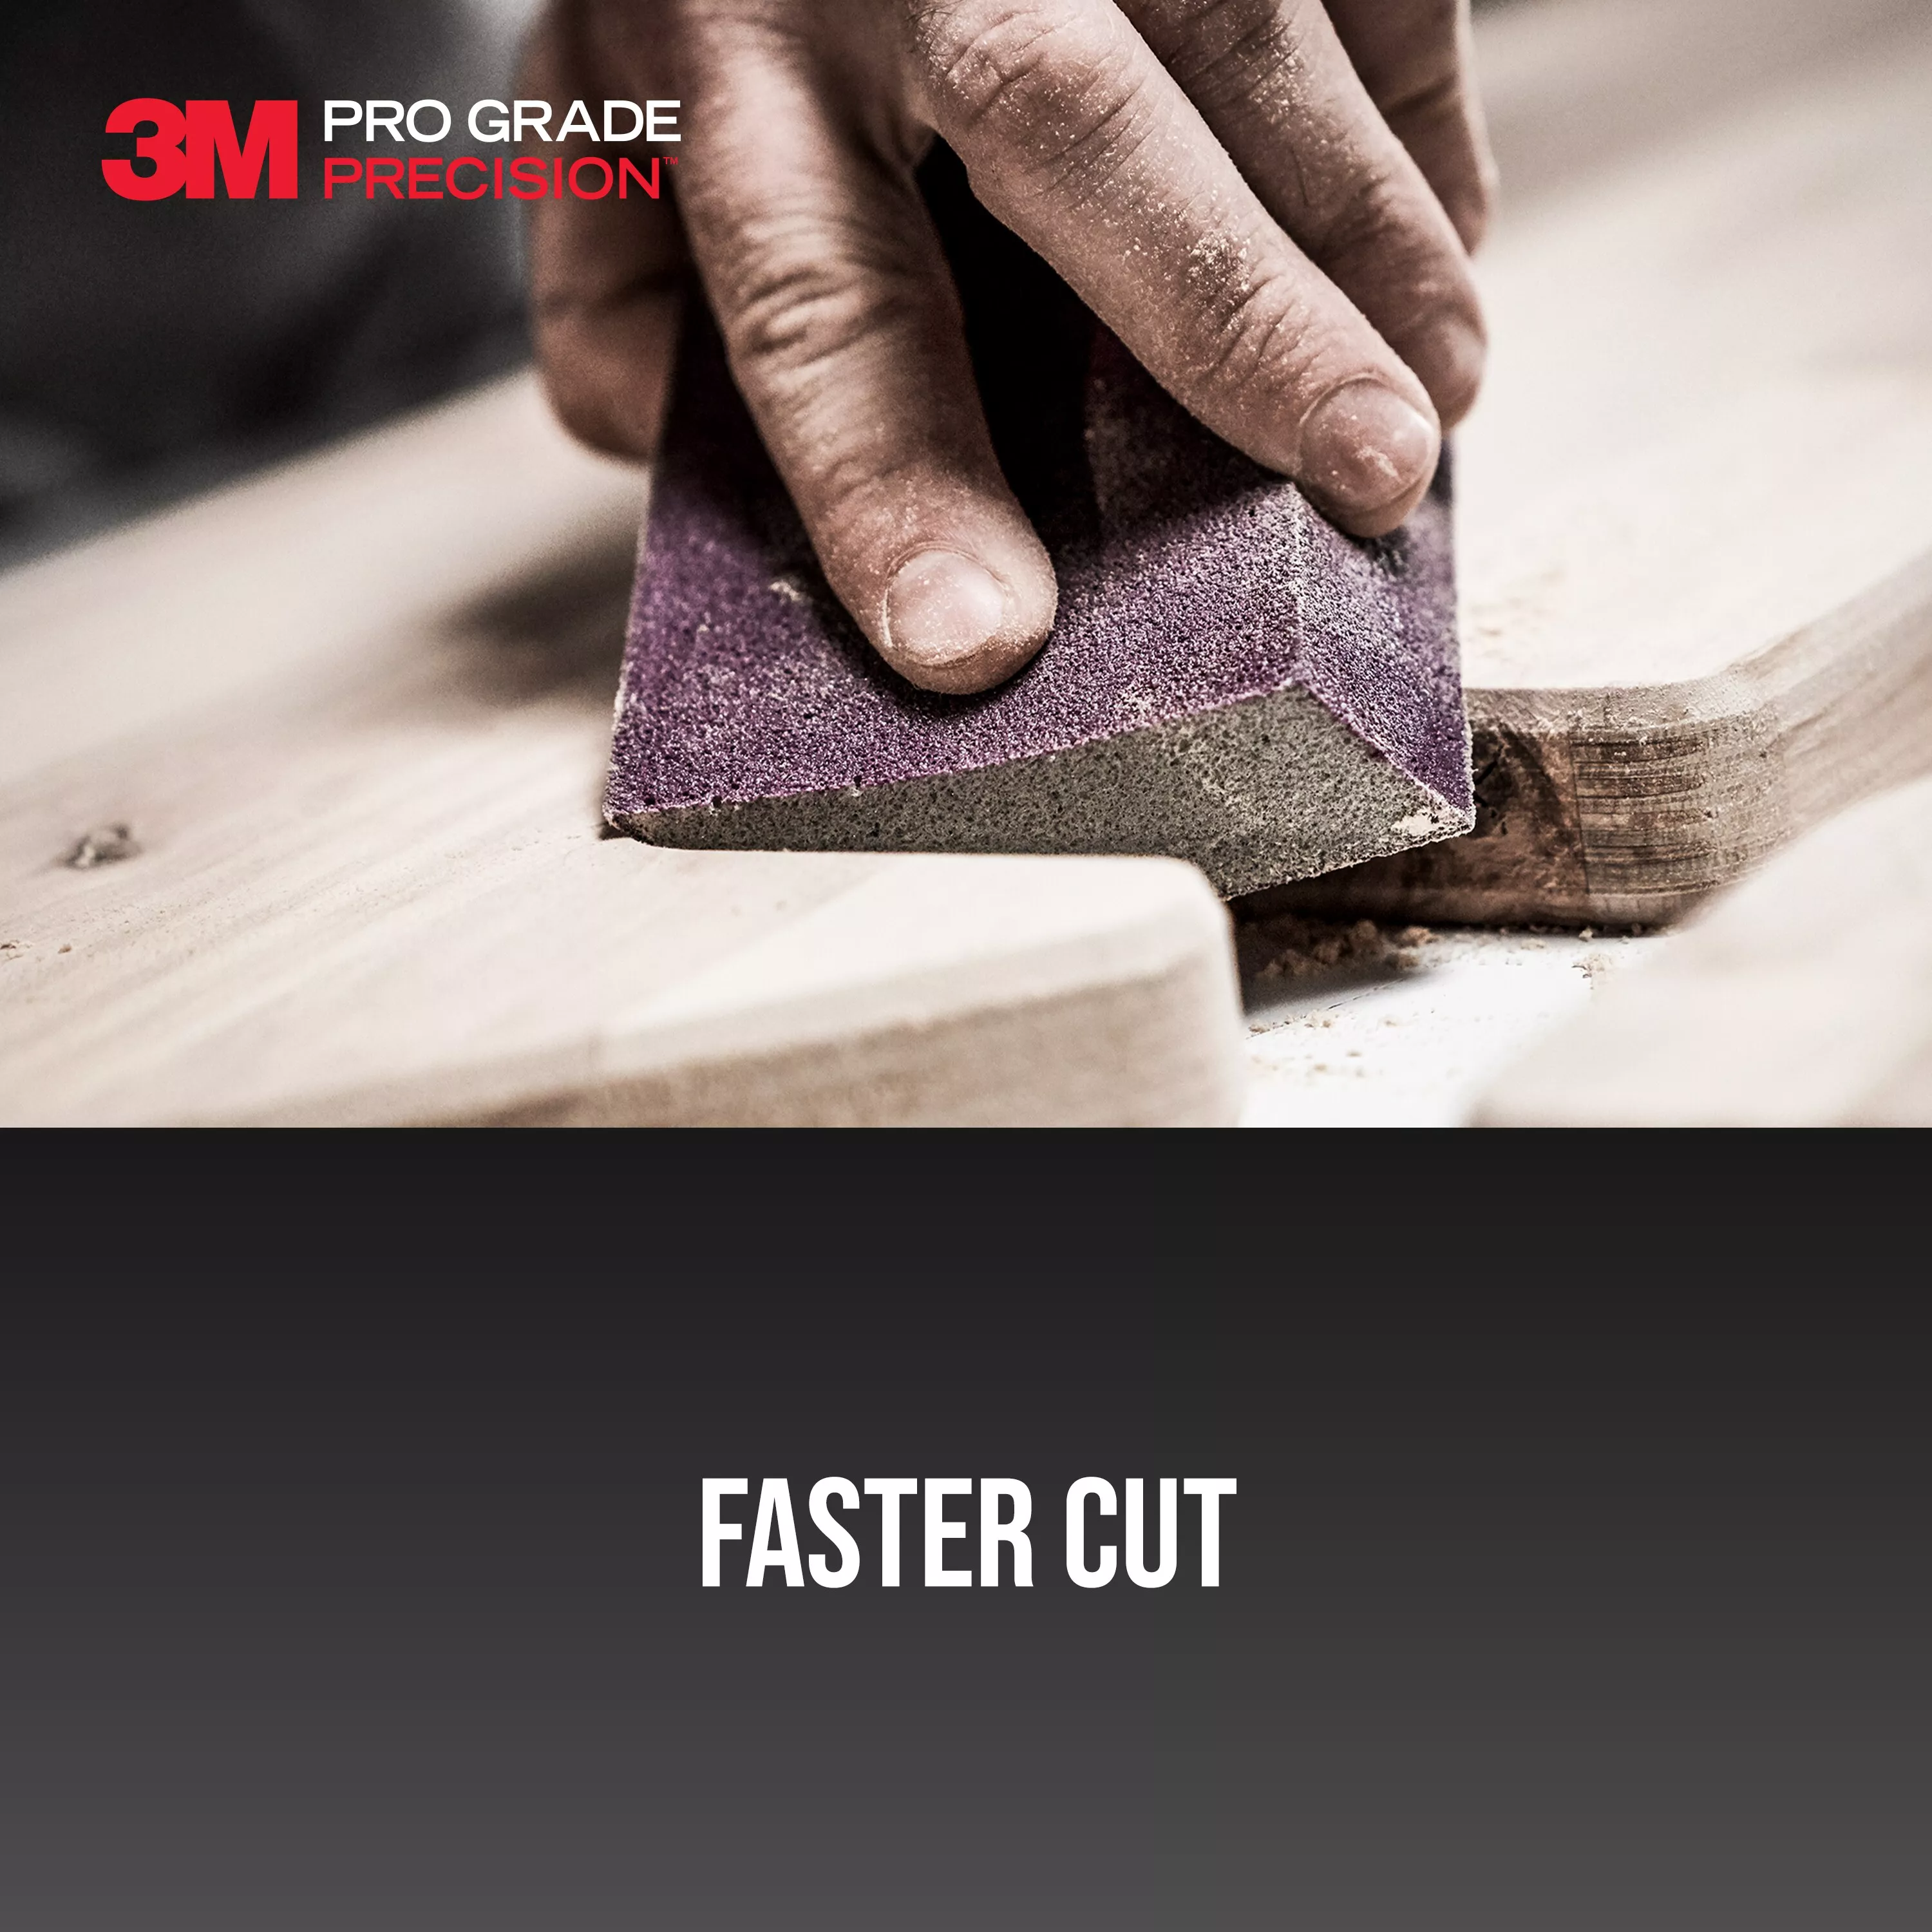 SKU 7100170034 | 3M™ Pro Grade Precision™ Faster Sanding Block Sponge